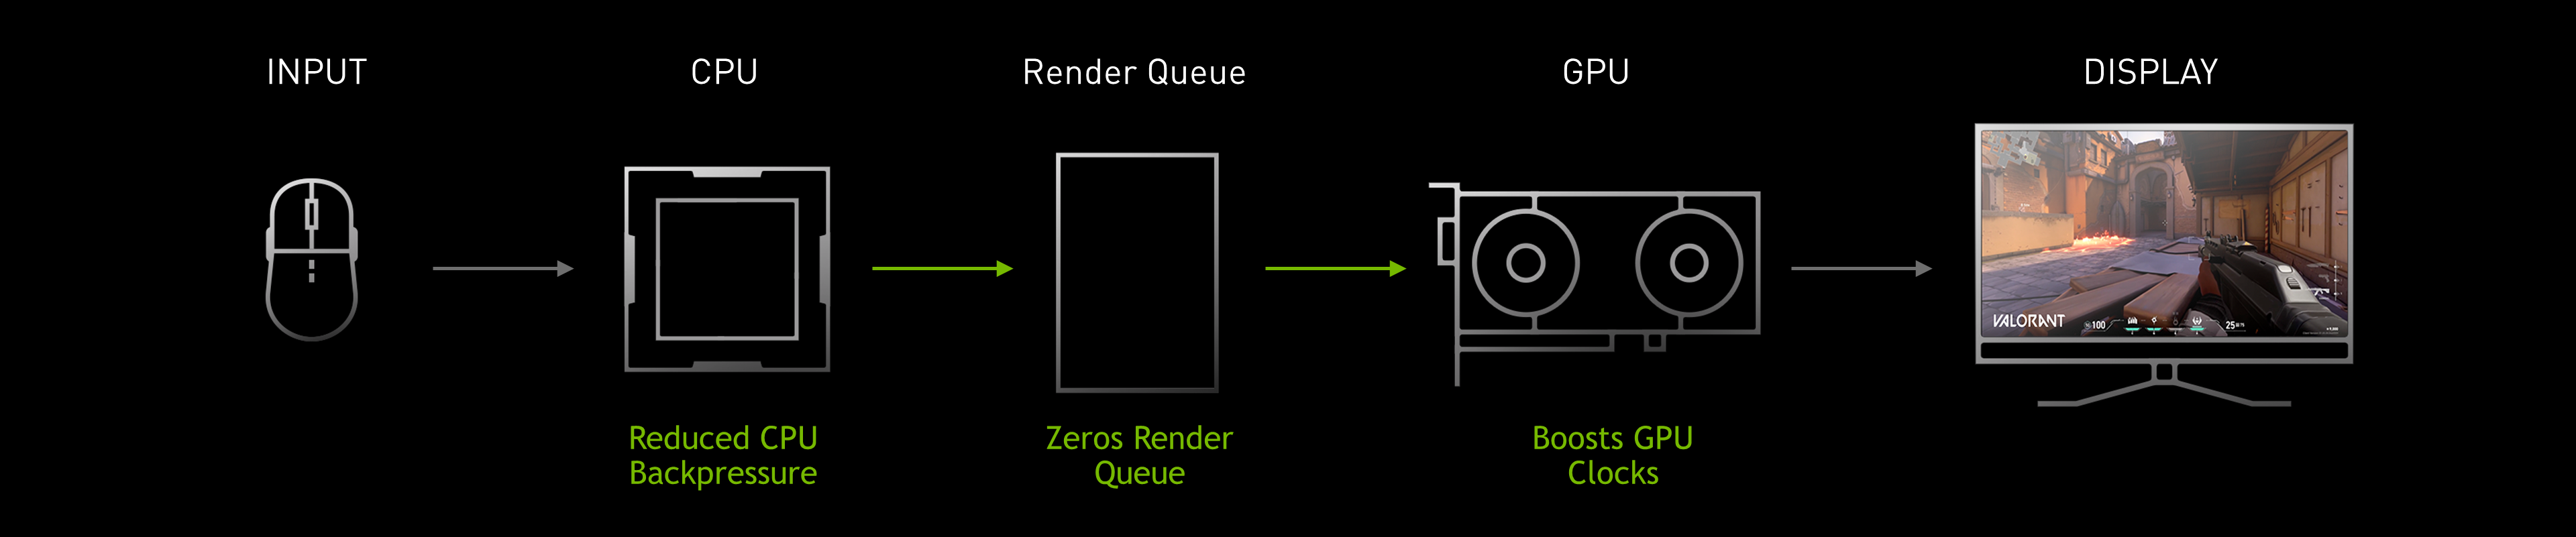 Nvidia reflex dota 2 включать или нет фото 51